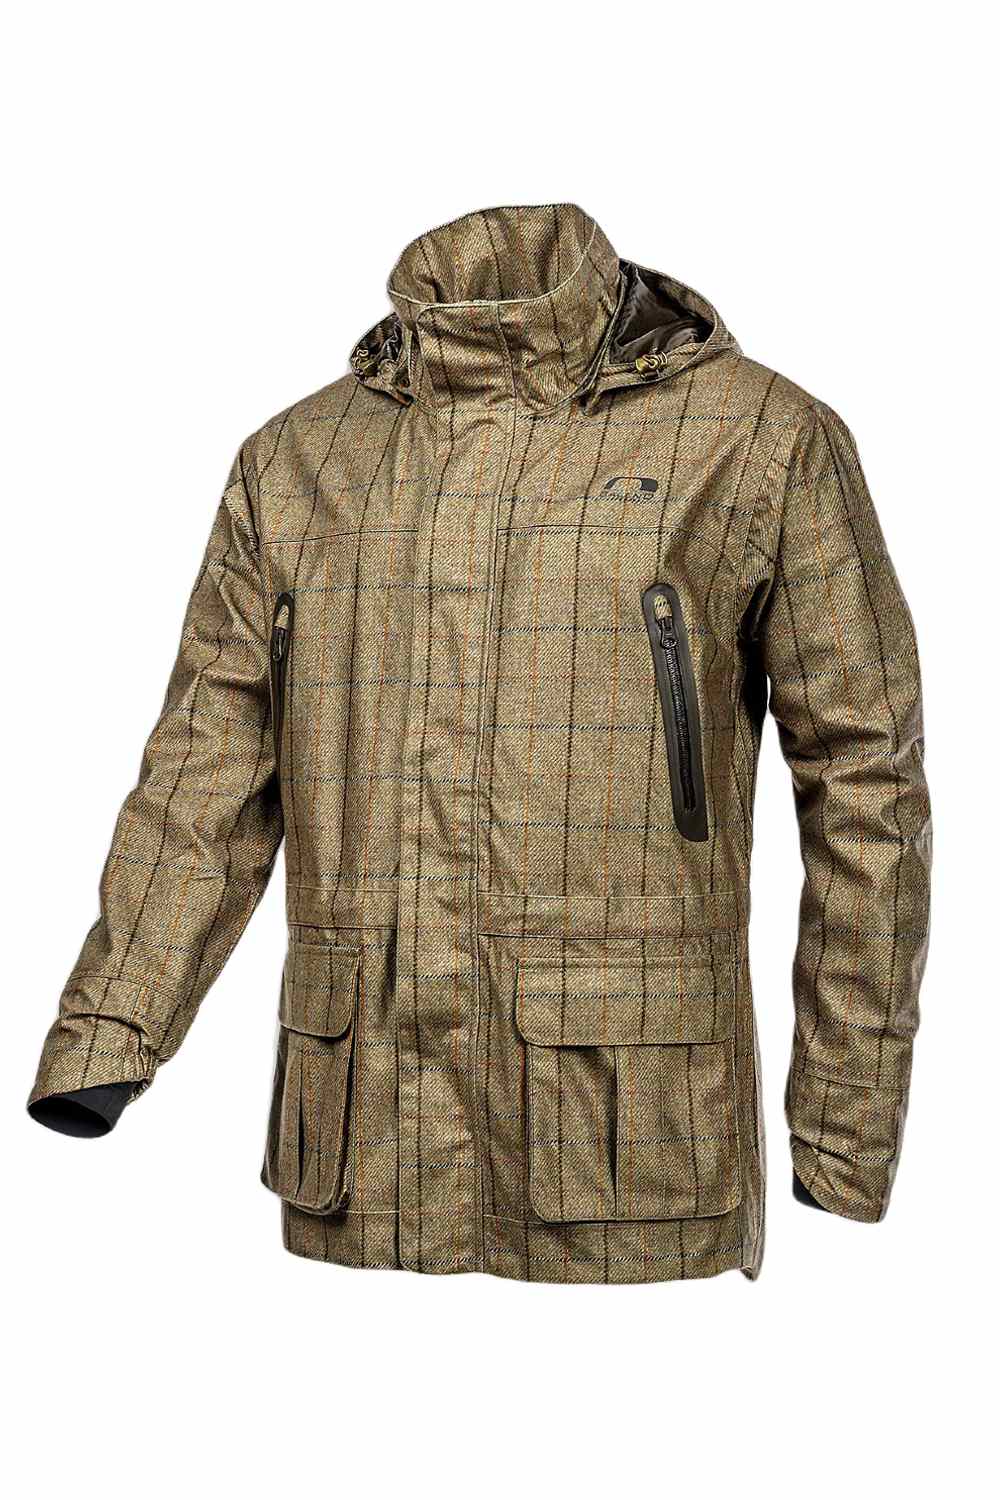 Baleno Moorland Waterproof Jacket In Check Khaki 